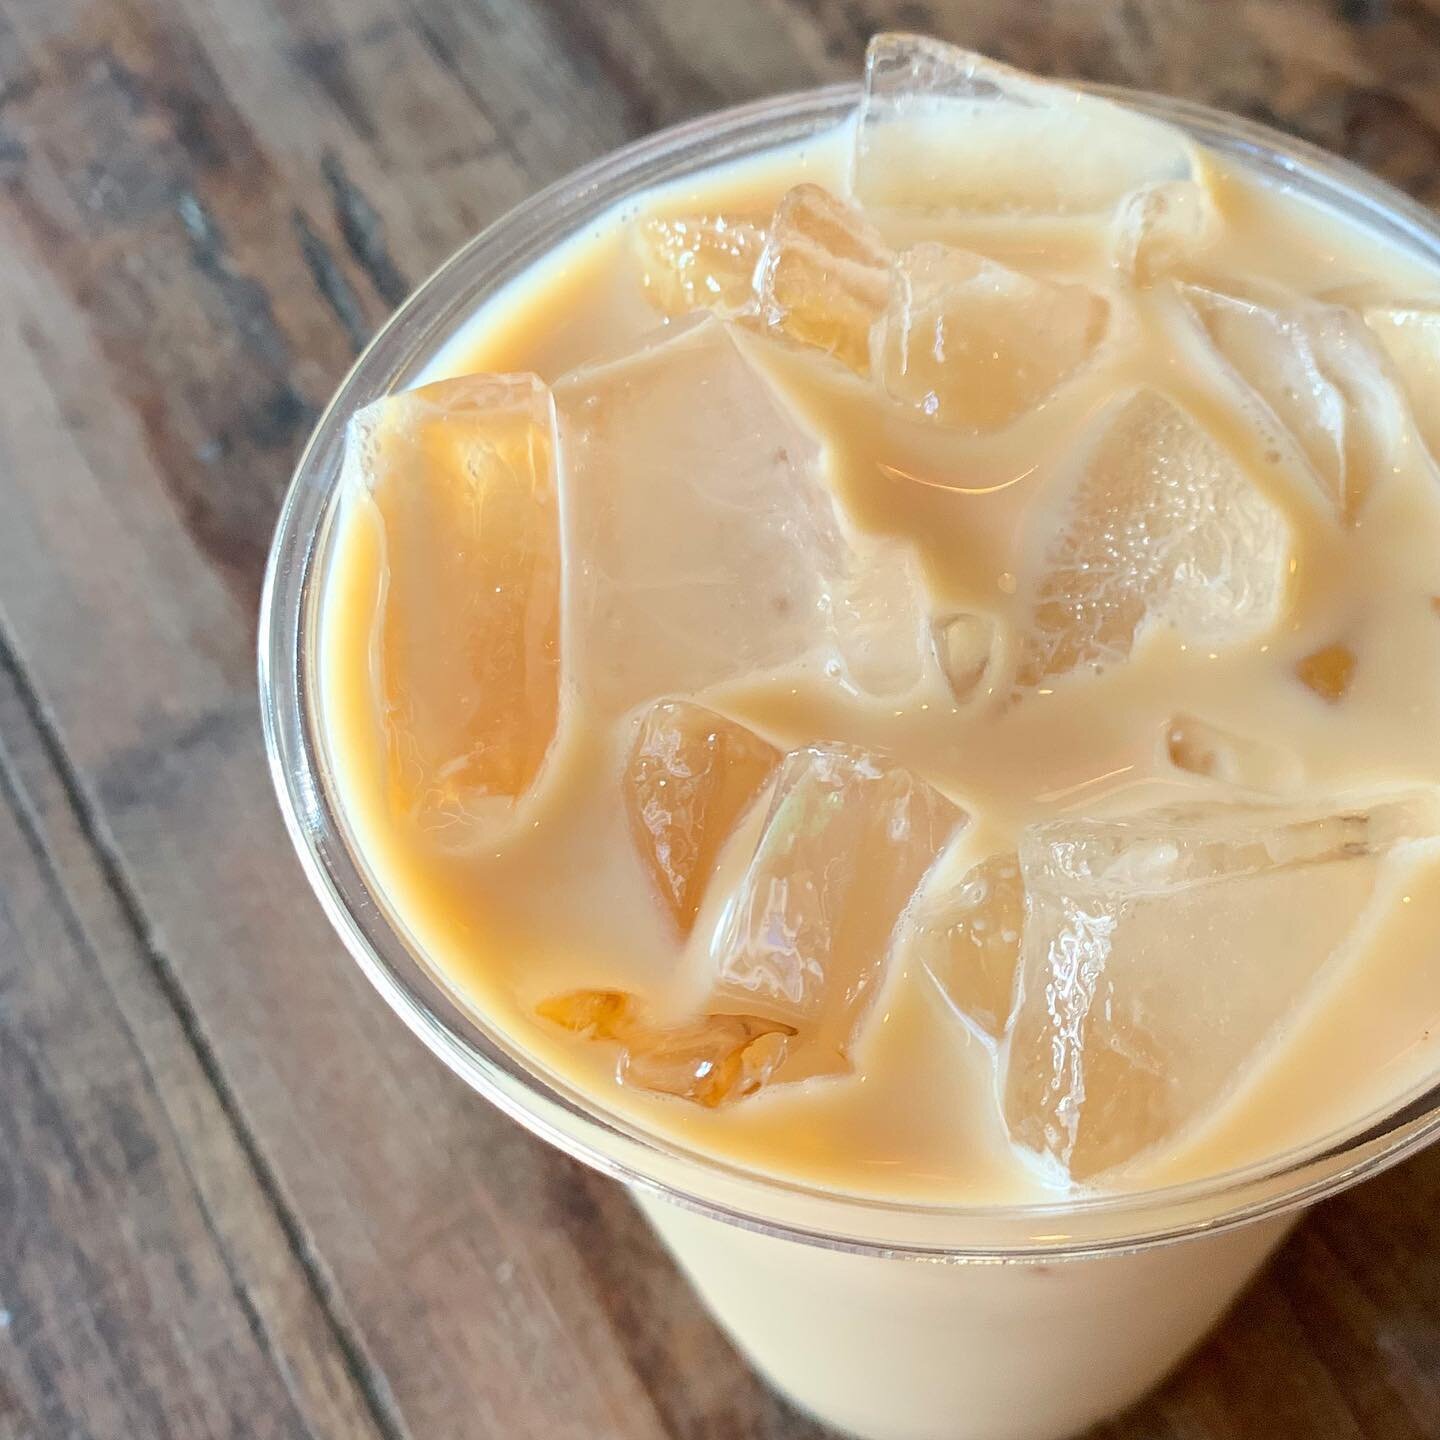 Iced lattes over anything 👏

#fargond #ilovefargo #fargomoorhead #fargocoffee